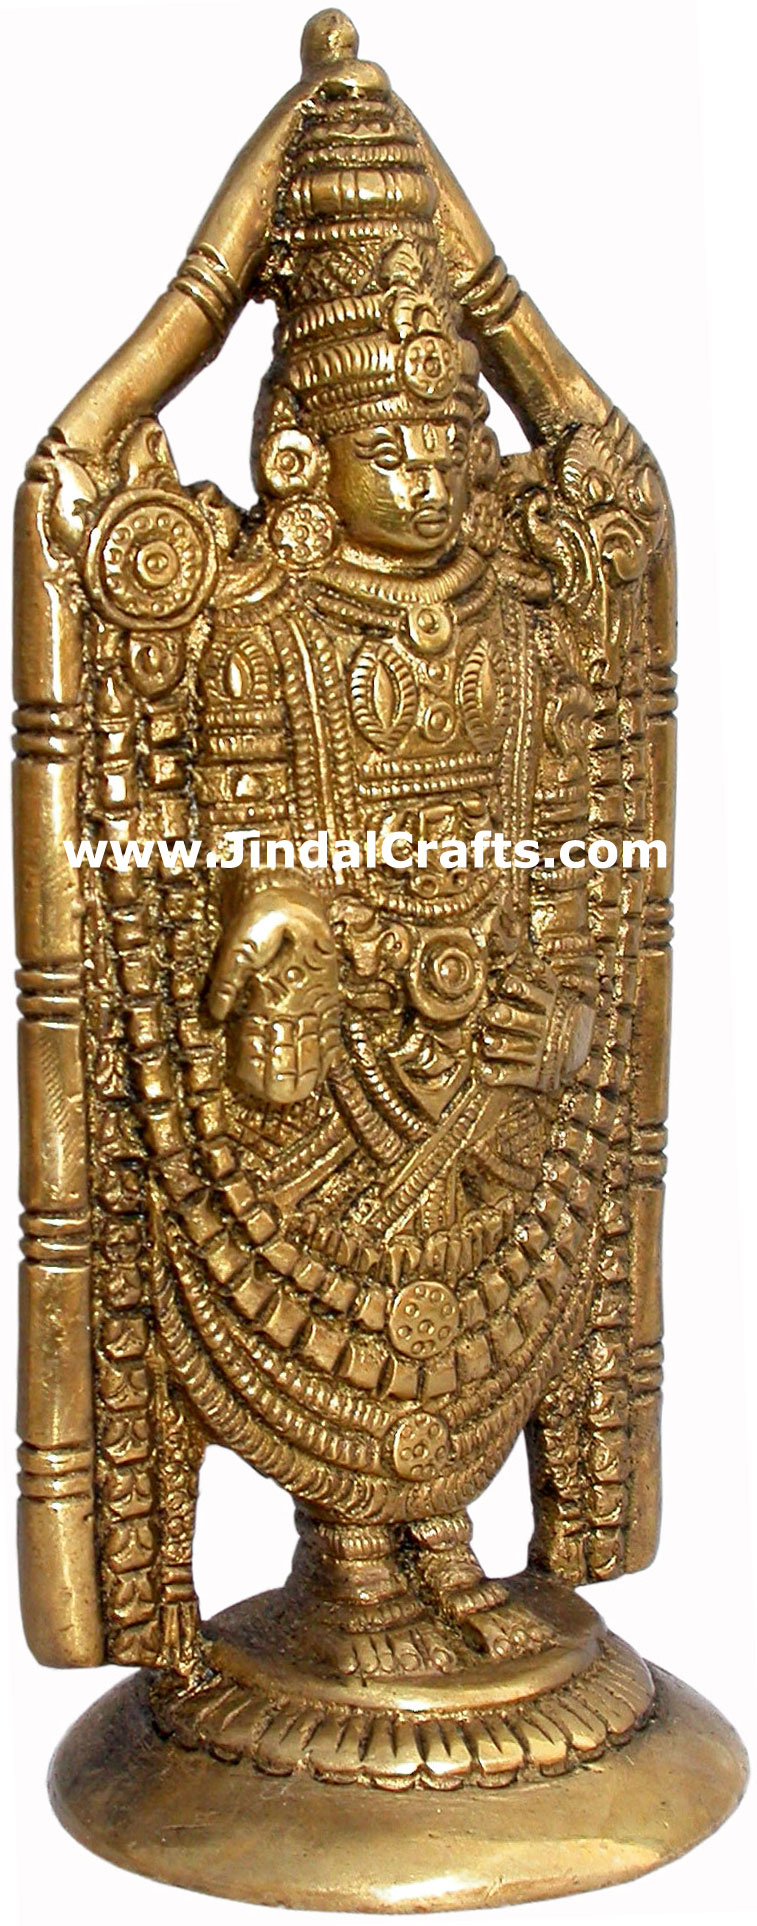 Bala Ji - Hand Carved Indian Art Craft Handicraft Home Decor Brass Figurine